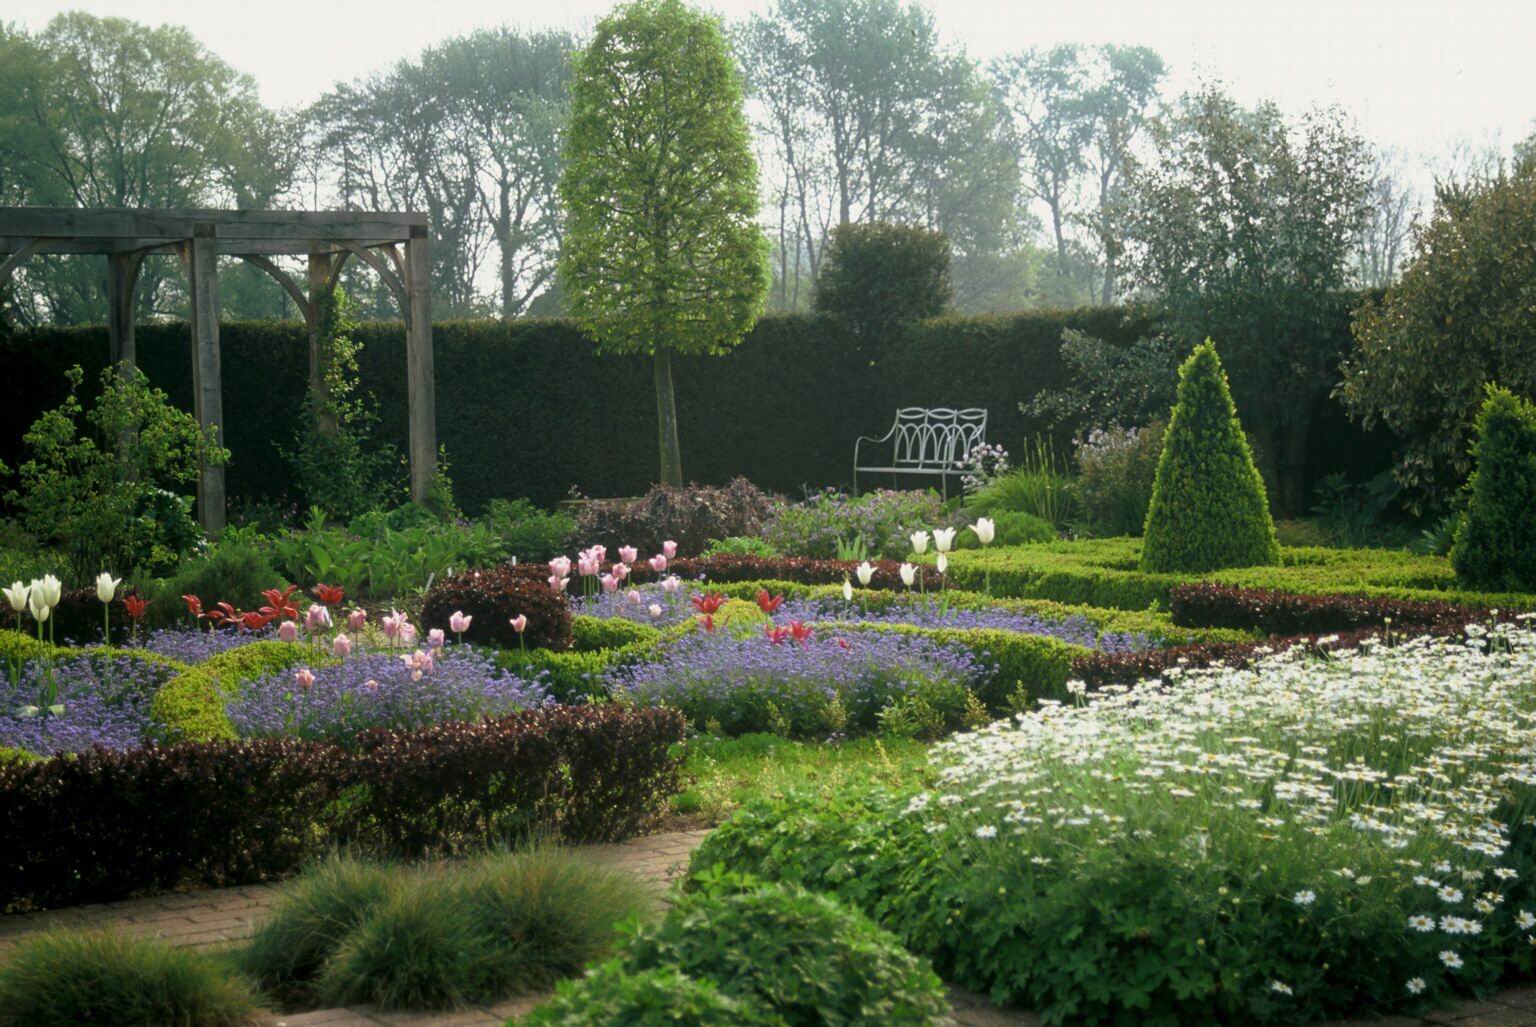 Разбитый сад. (Сады) Уотерперри Waterperry Gardens. Сад Waterperry Gardens, Оксфорд, Великобритания. Сад Эдем в Англии. Rose Garden (Horticulture).